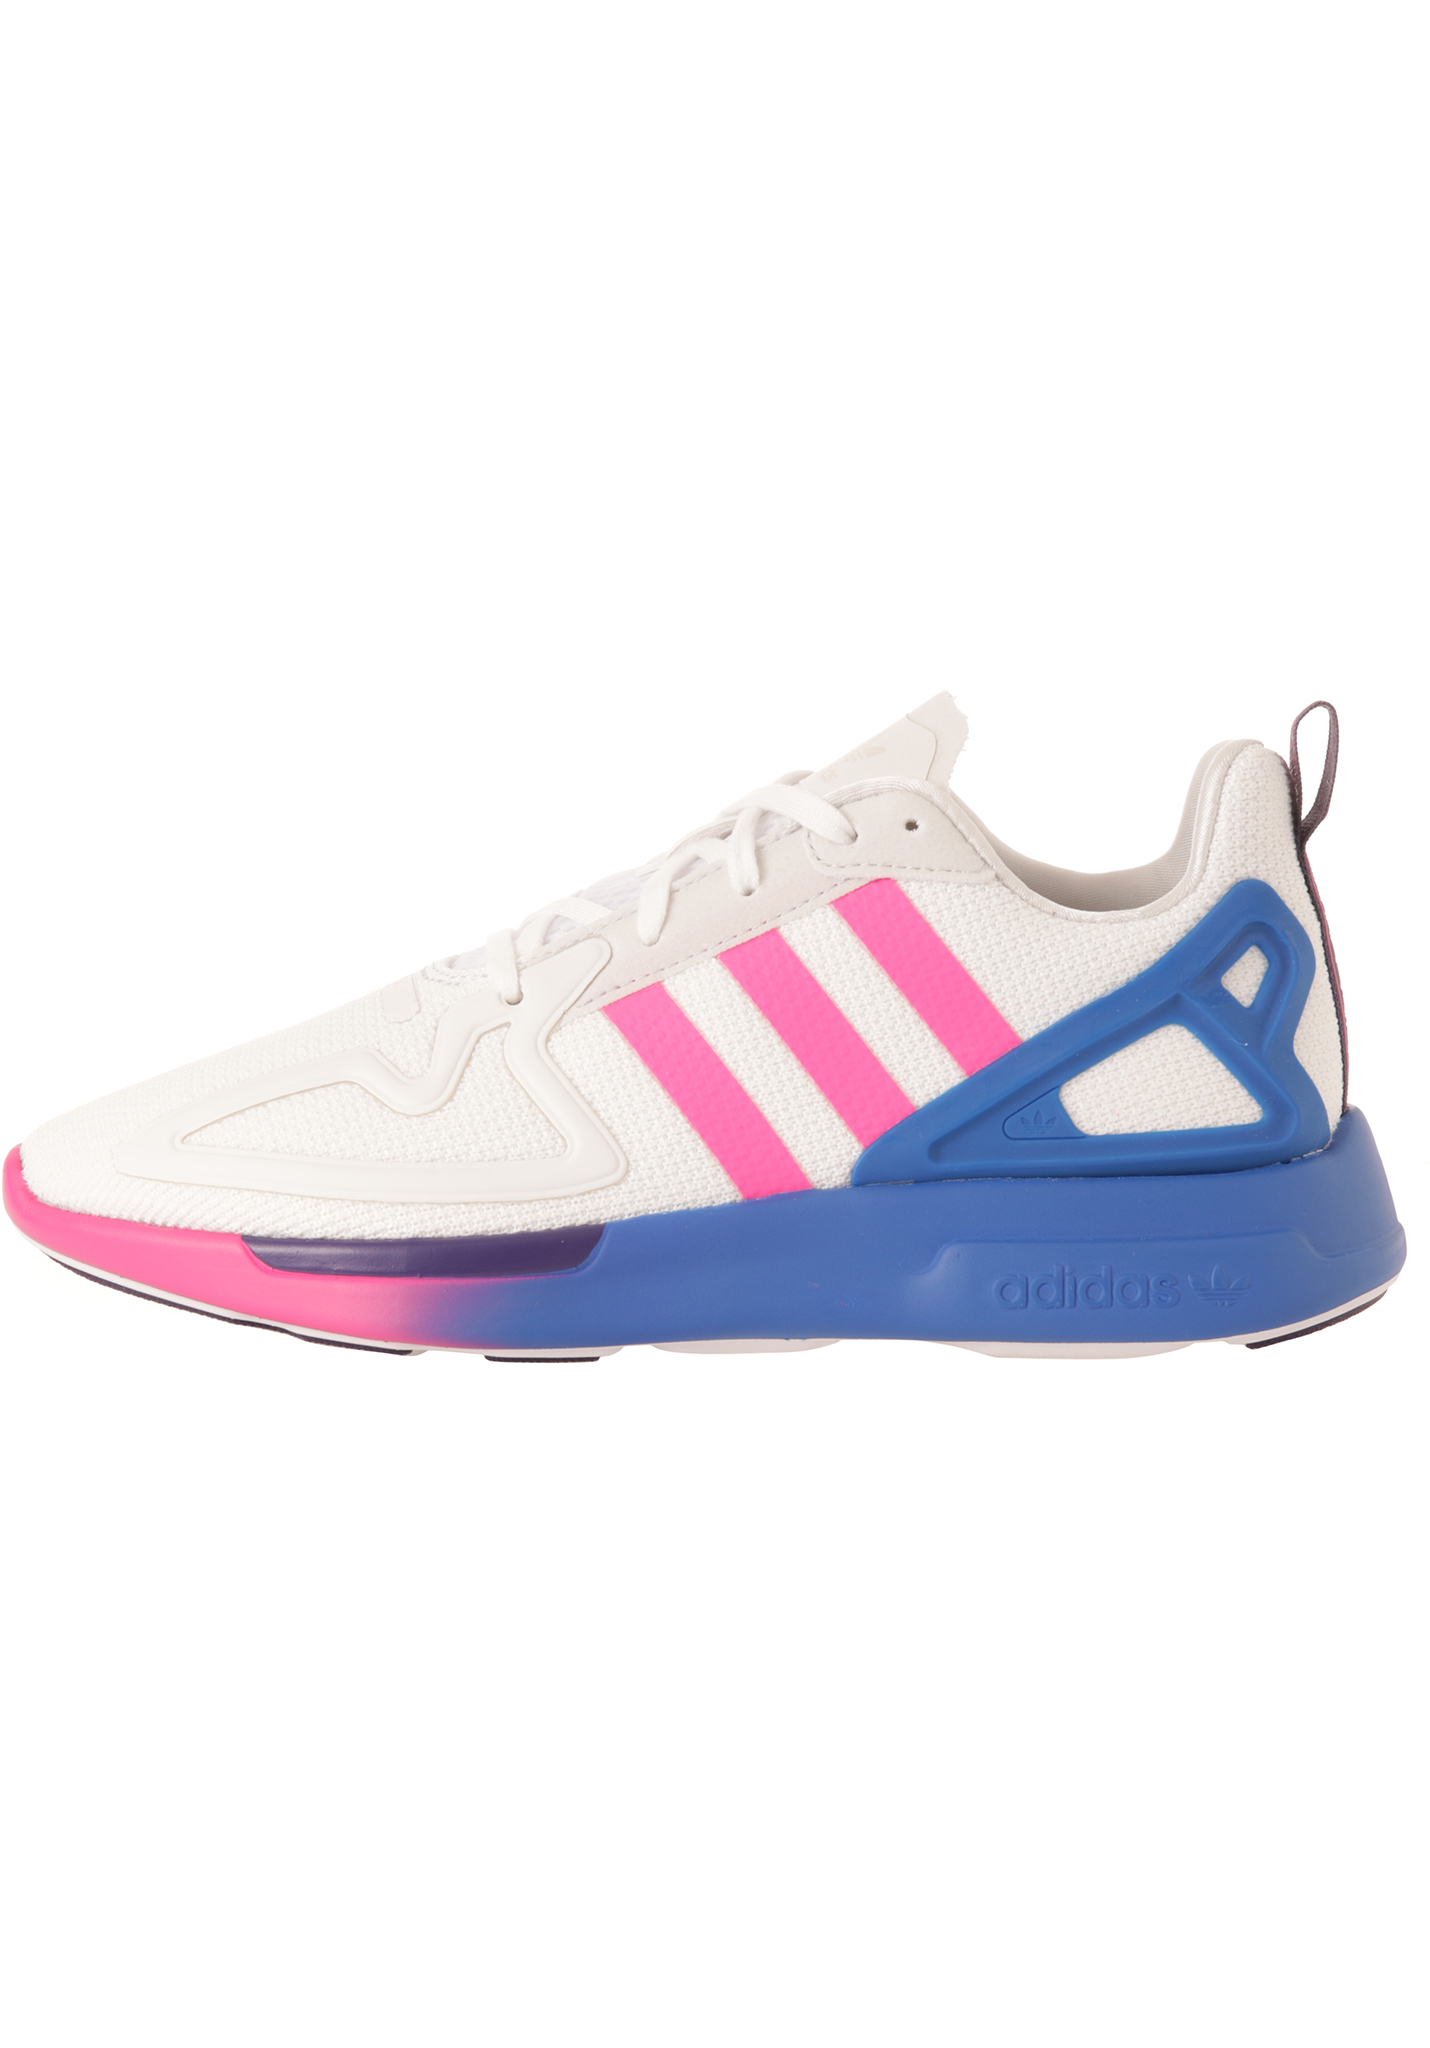 Adidas Originals Zx 2K Flux Sneaker Low kristallweiß/schockrosa/blau 41 1/3